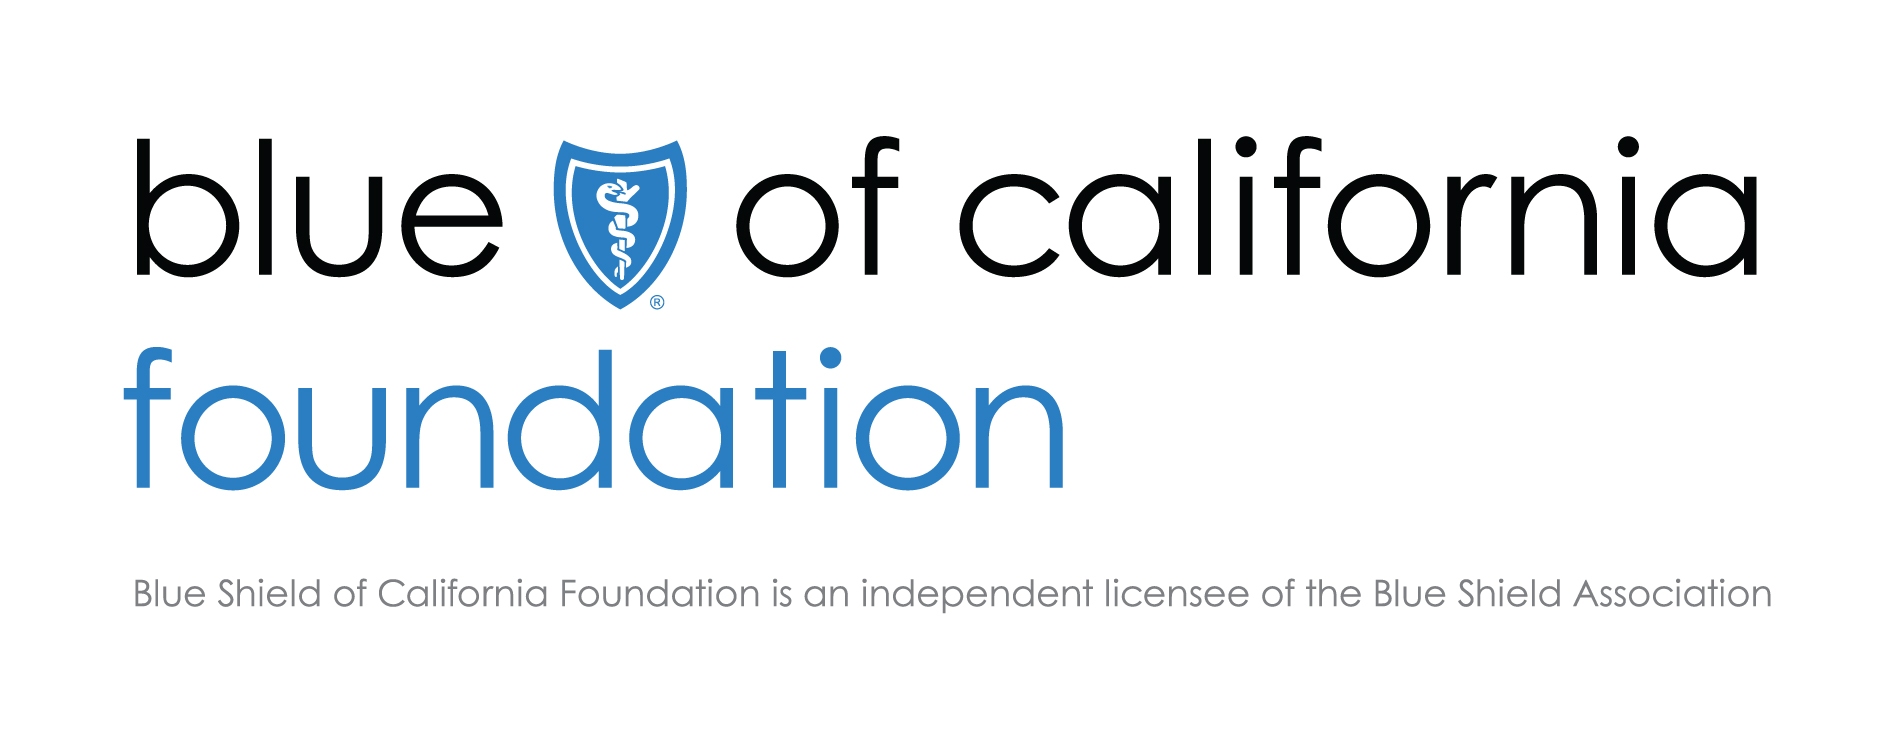 blue_shield_california_foundation_logo